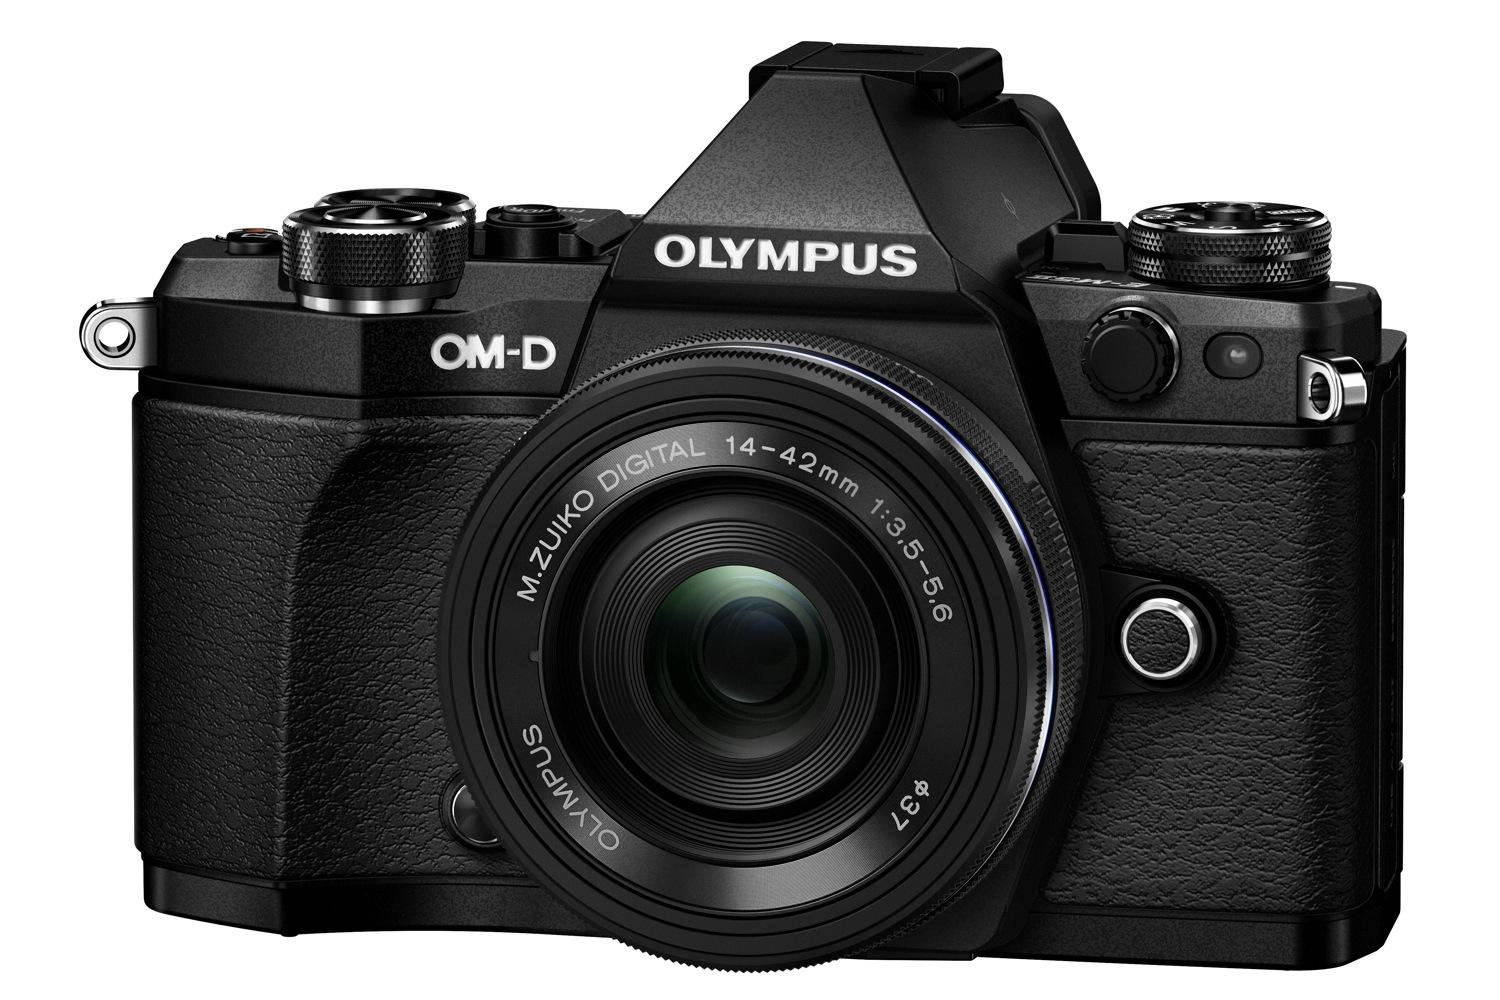 olympus e m5 mark ii puts focus movie stabilization 40 megapixel photos m5markii blk right m14 42ez